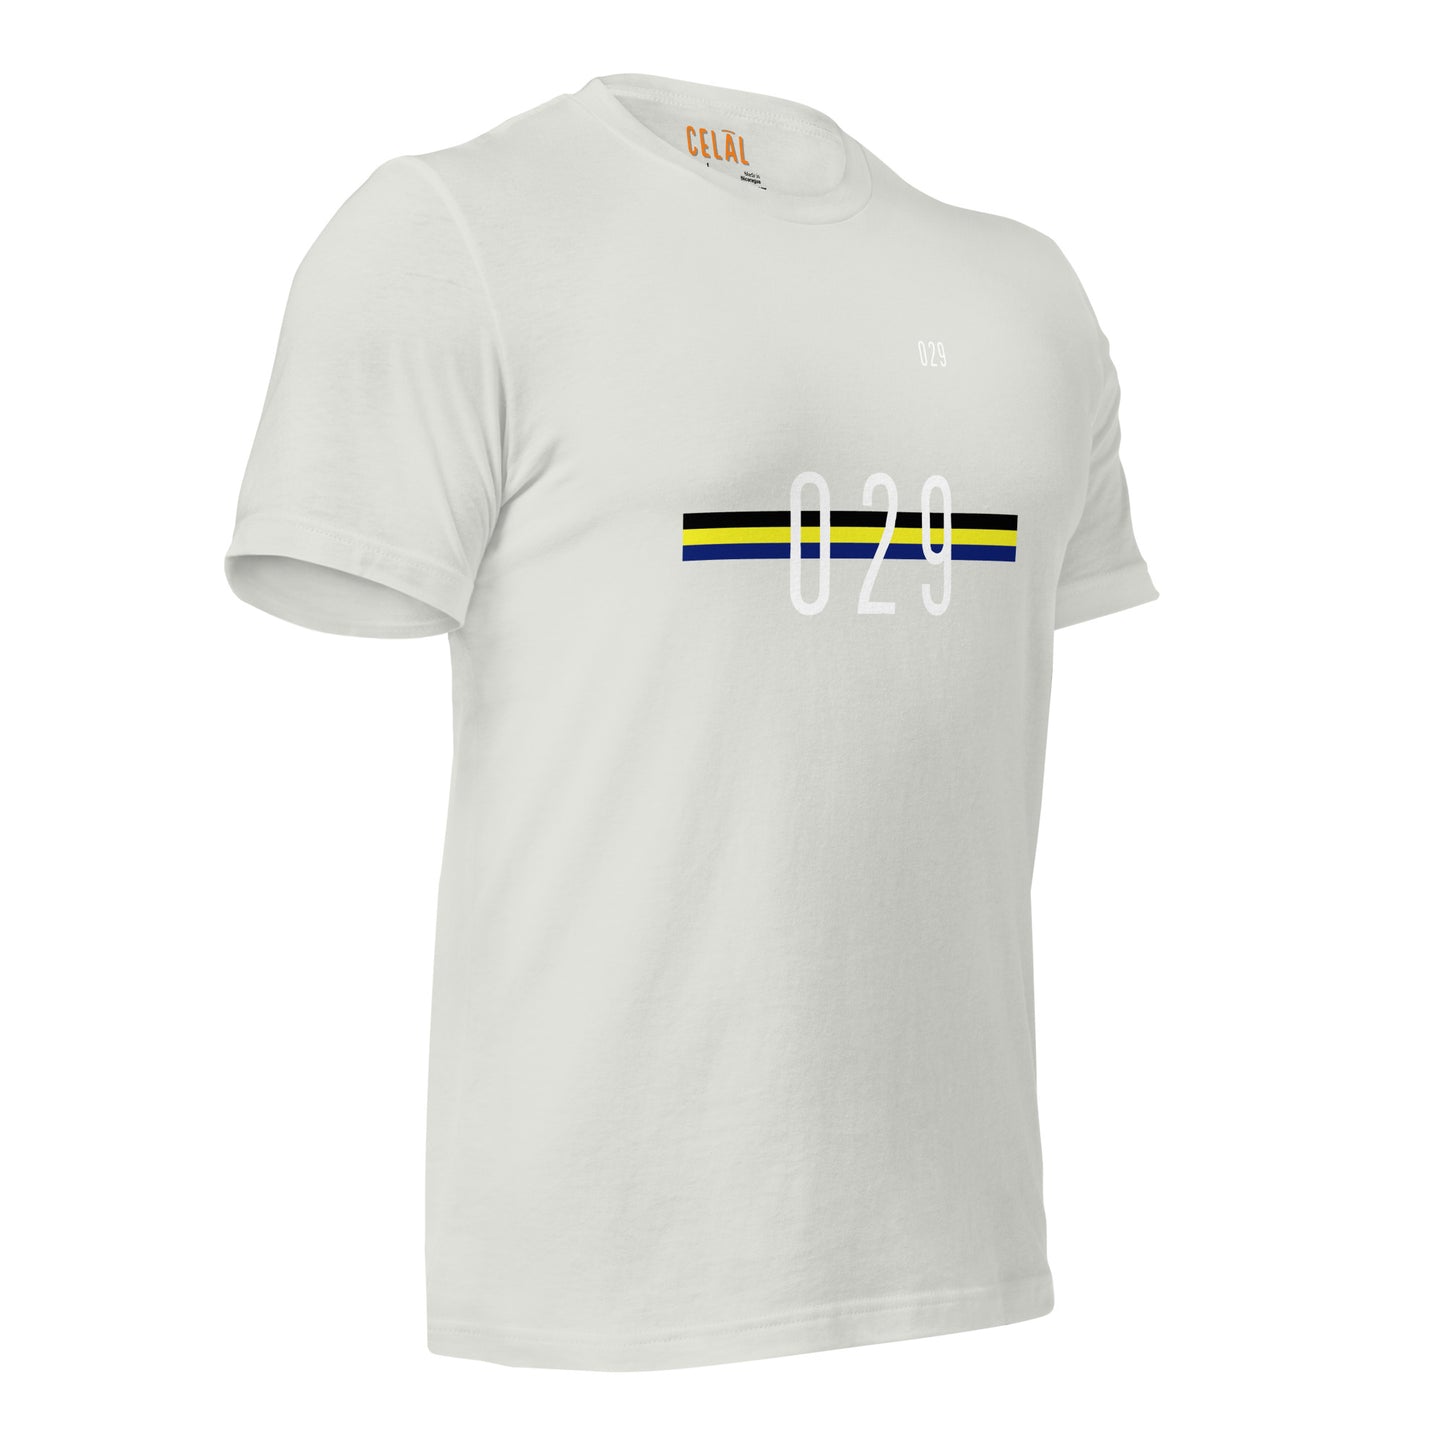 029 Unisex t-shirt